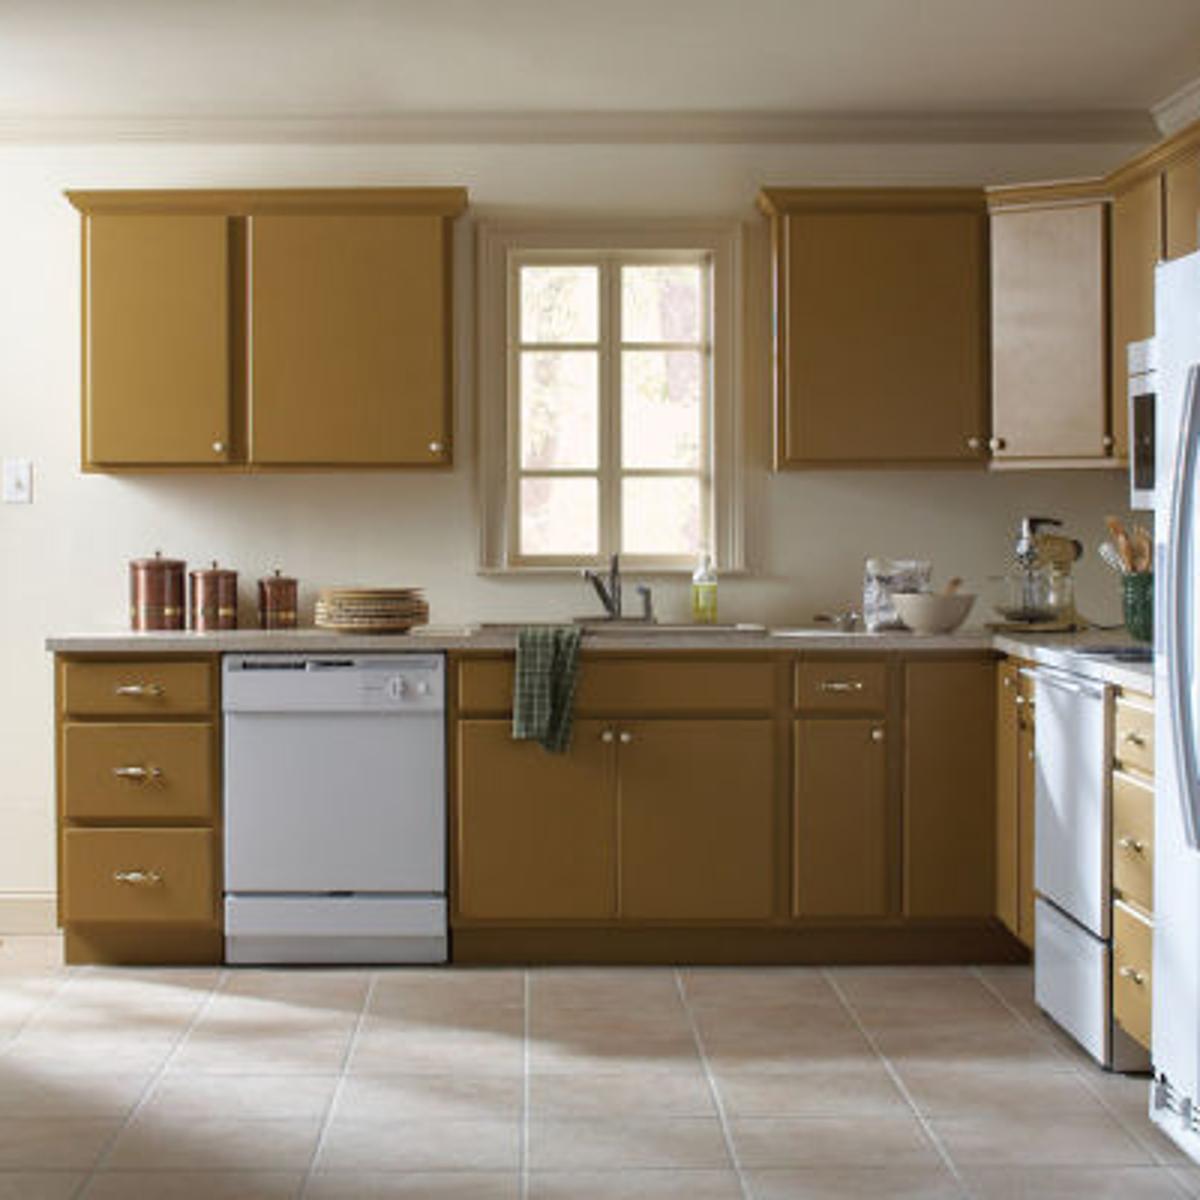 Kitchen Facelift Refacing Old Cabinets Archive Tulsaworld Com